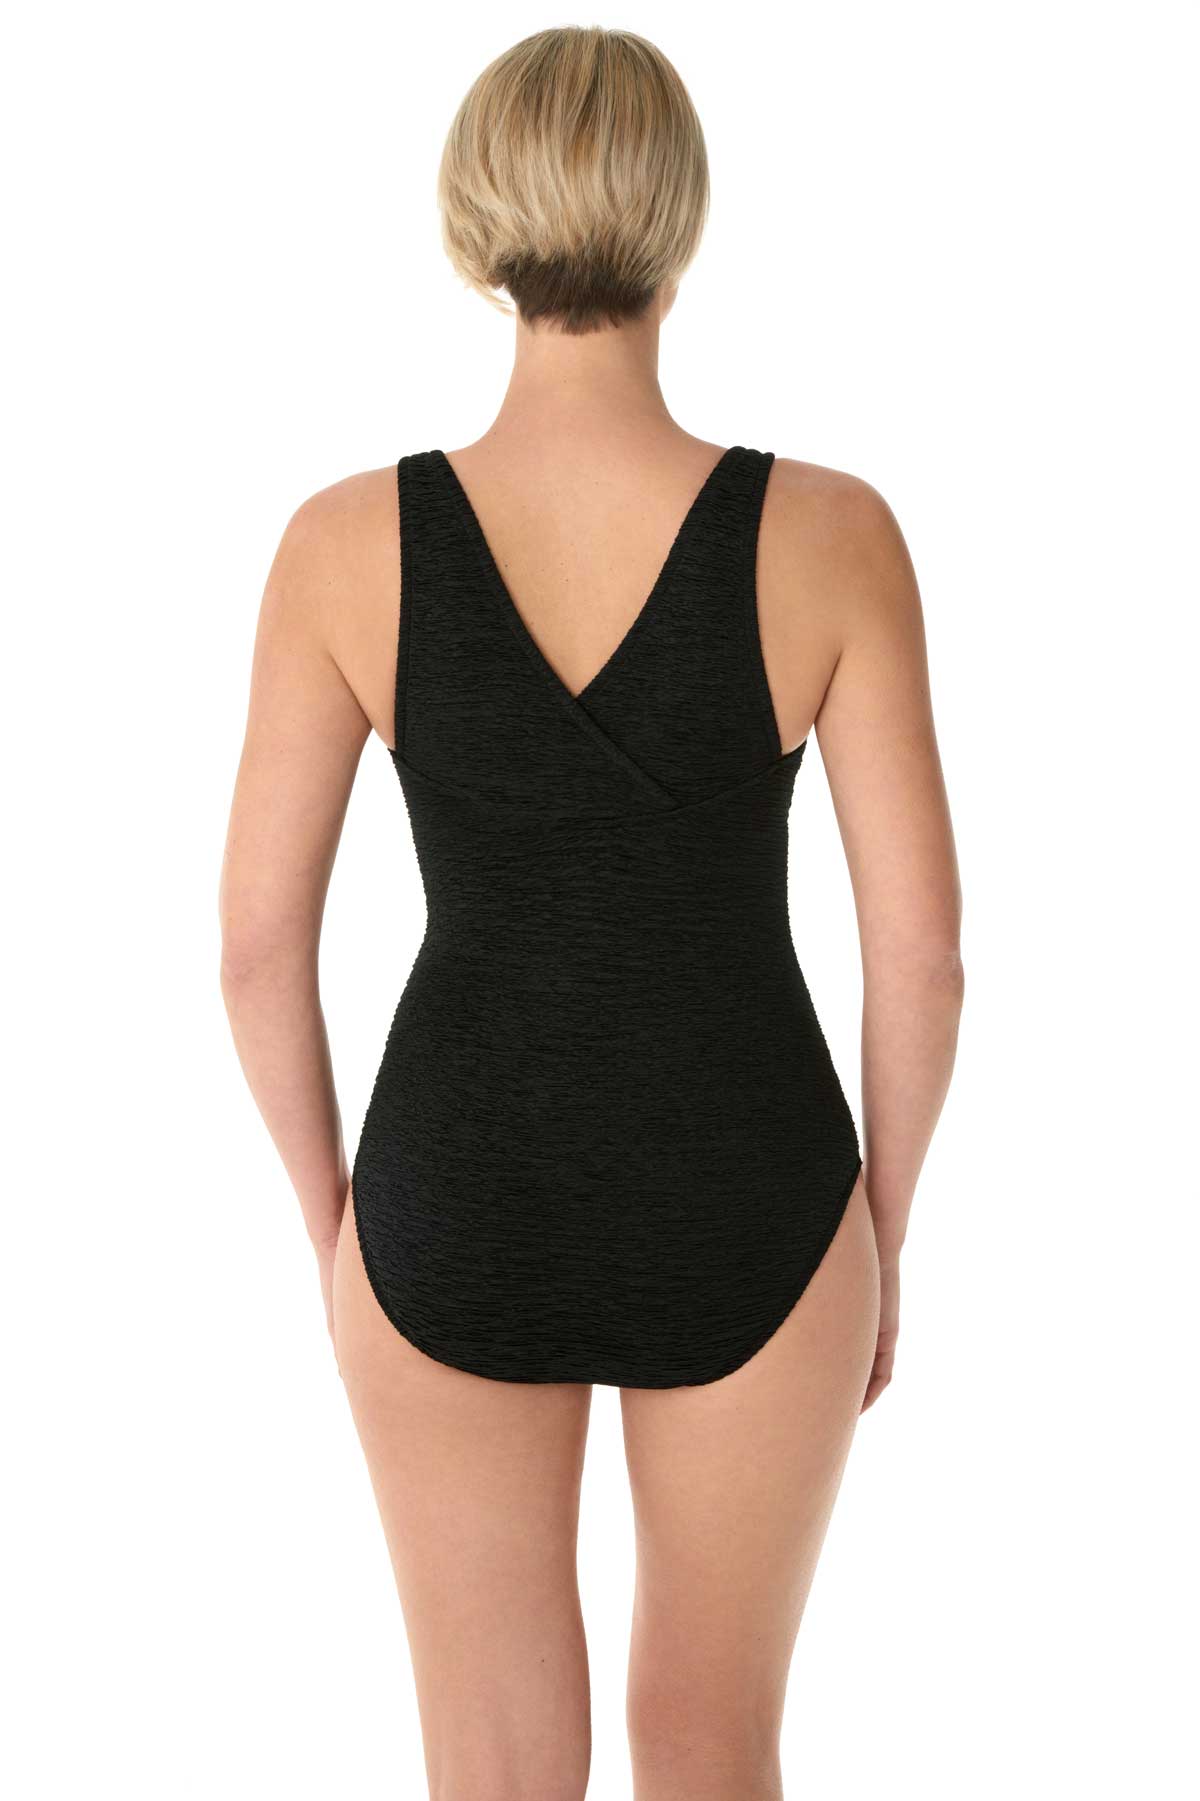 Penbrooke krinkle swimsuit X-back black Chlorine Proof size 14 or 16